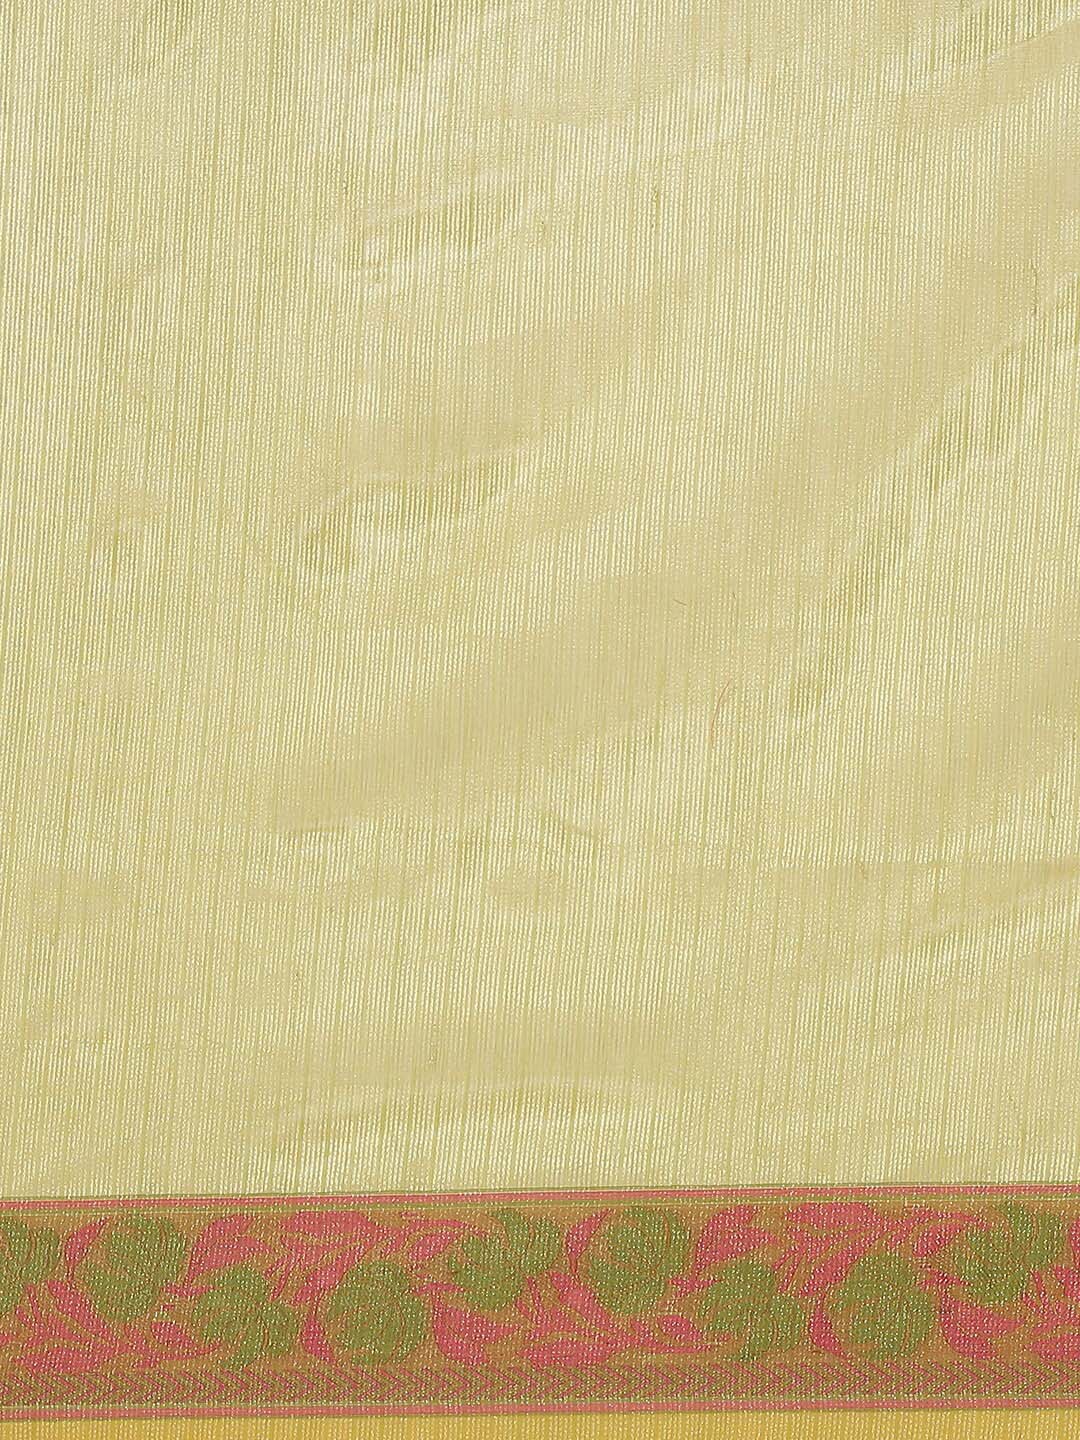 Indethnic Banarasi Olive Woven Design Work Wear Saree - View 1